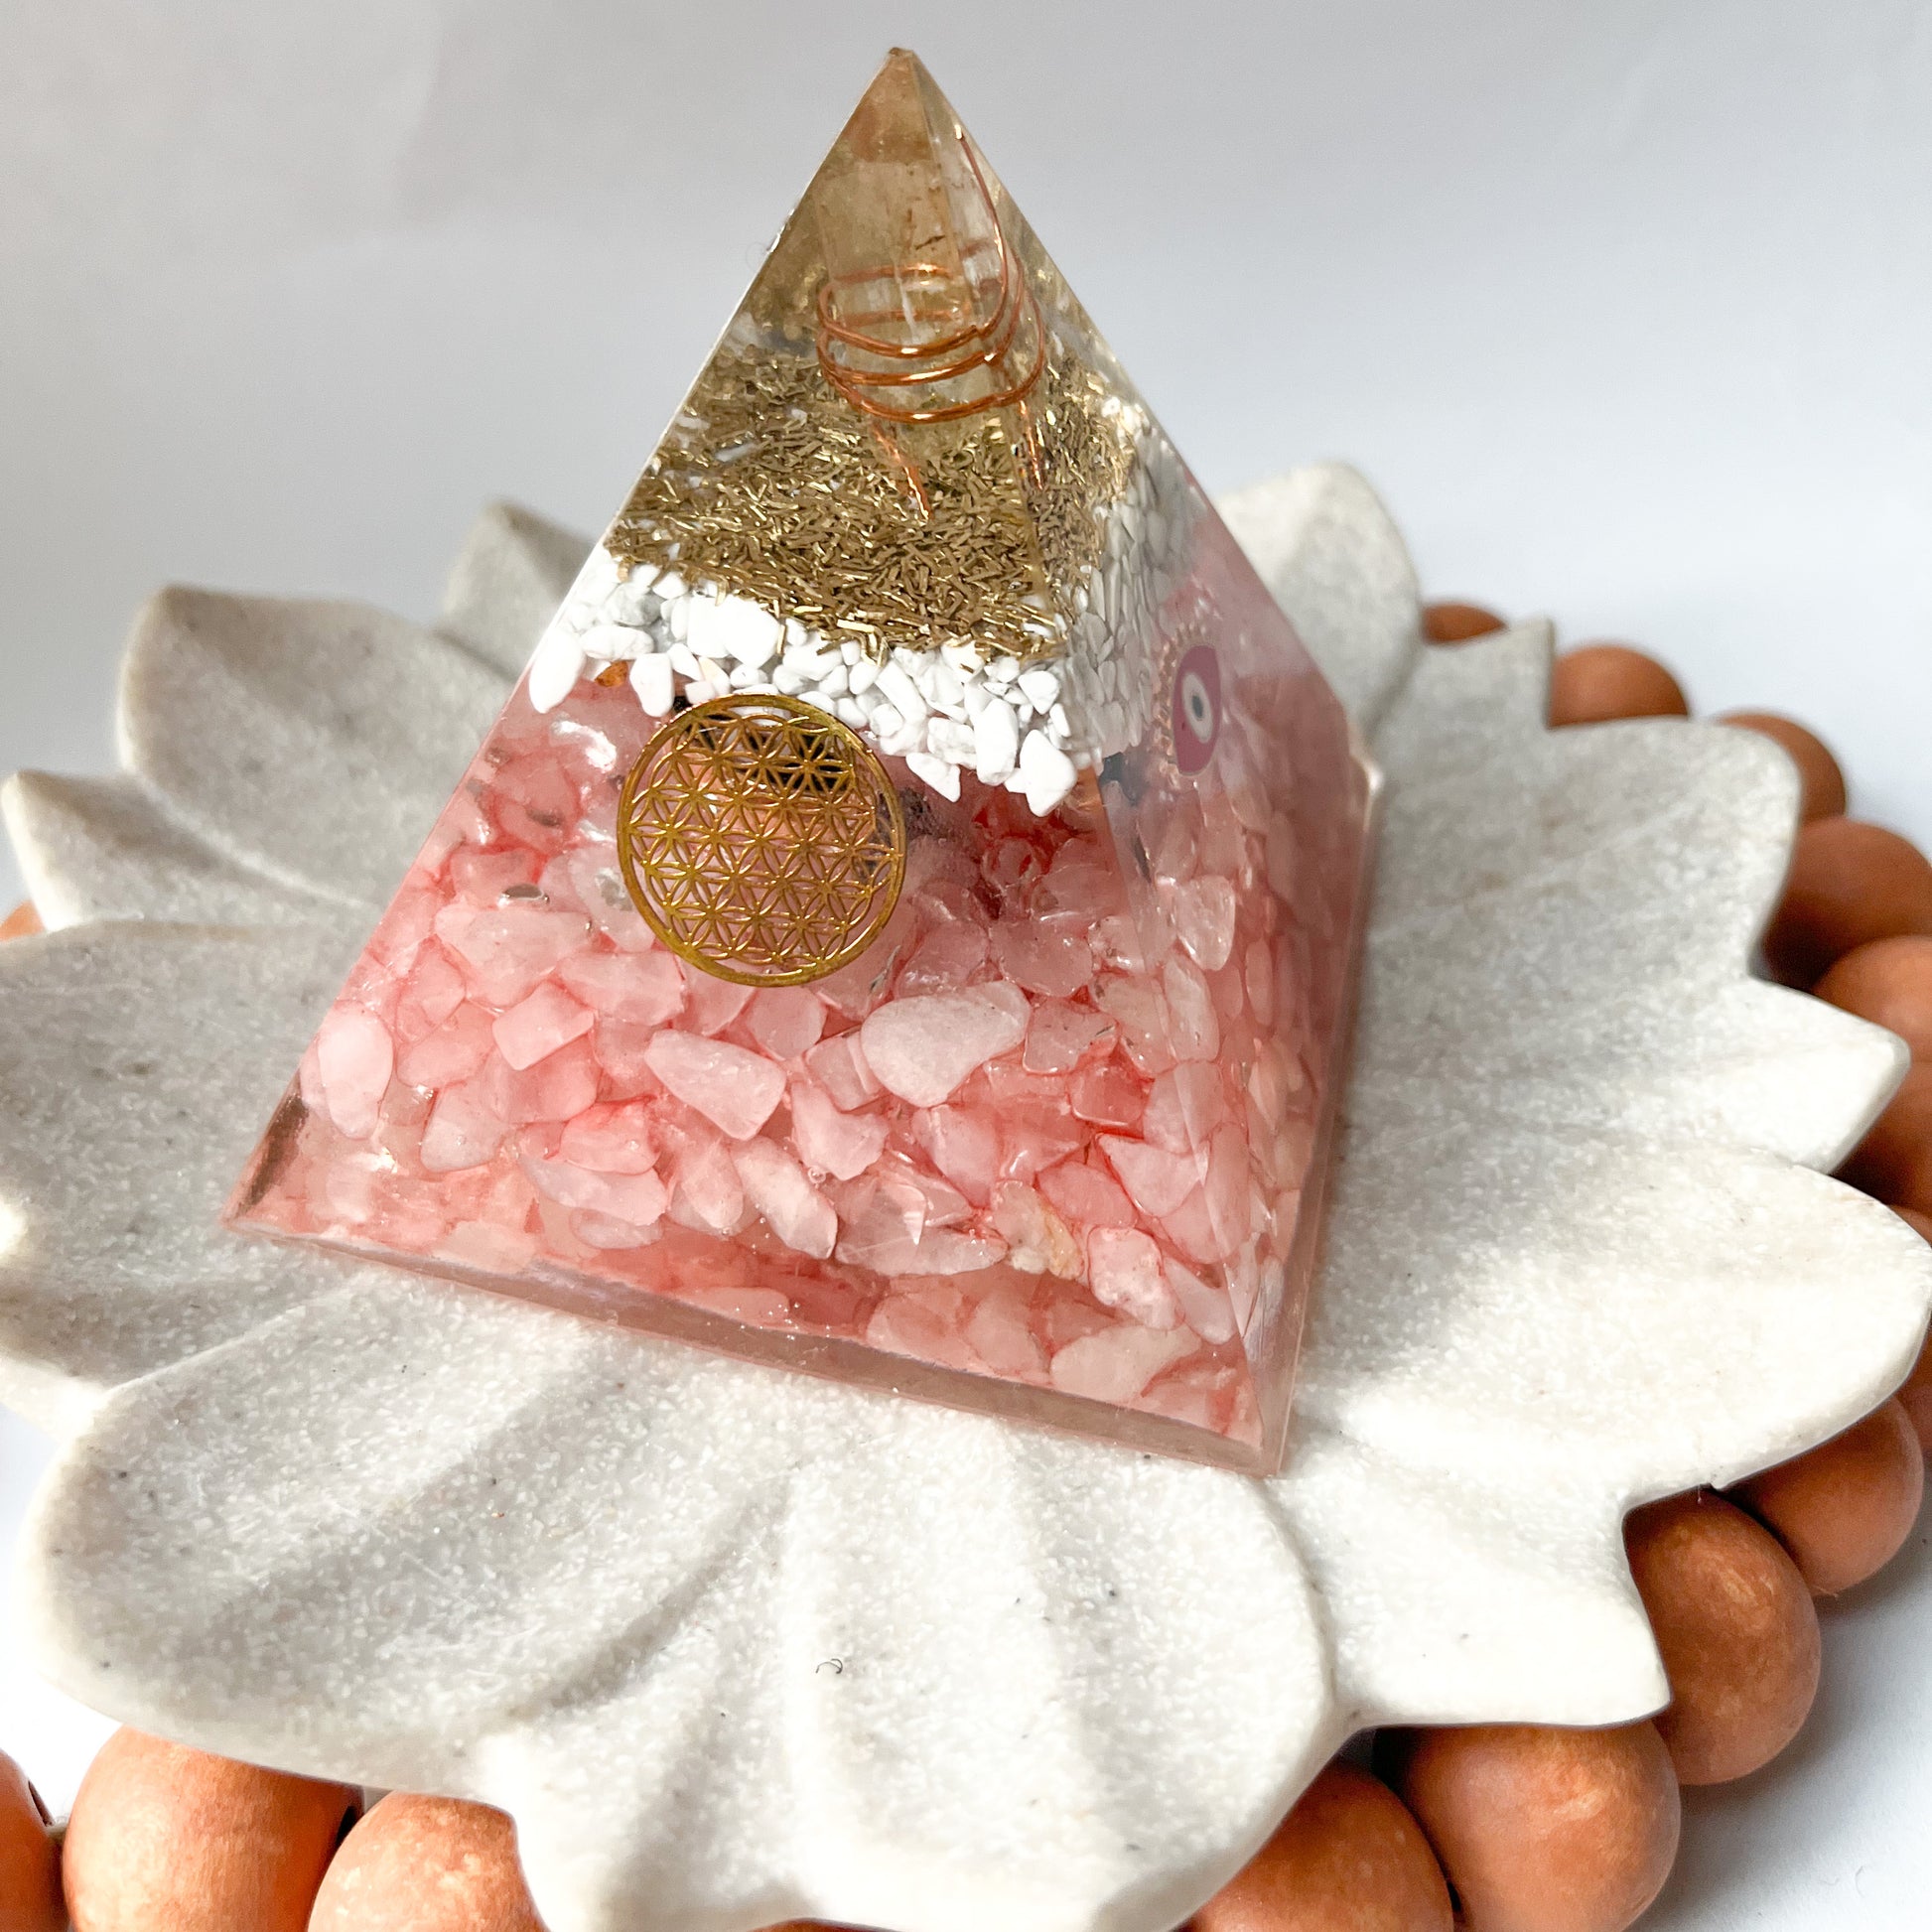 Small Rose quartz and howlite pyramid with evil eye